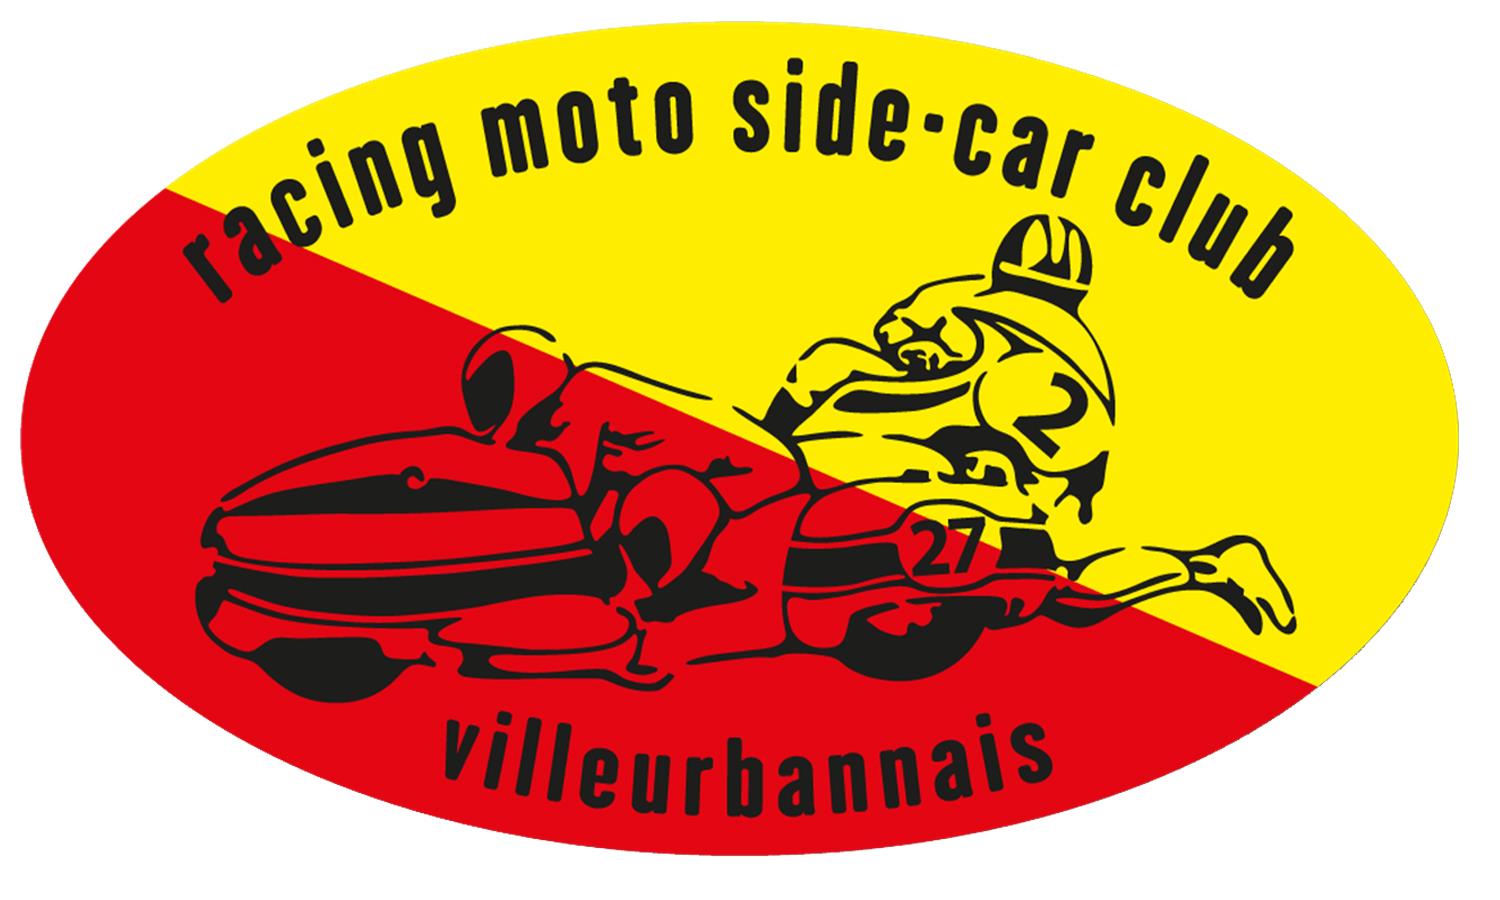 Wikilleurbanne : RacingMotoSideCarClubVilleurbannais